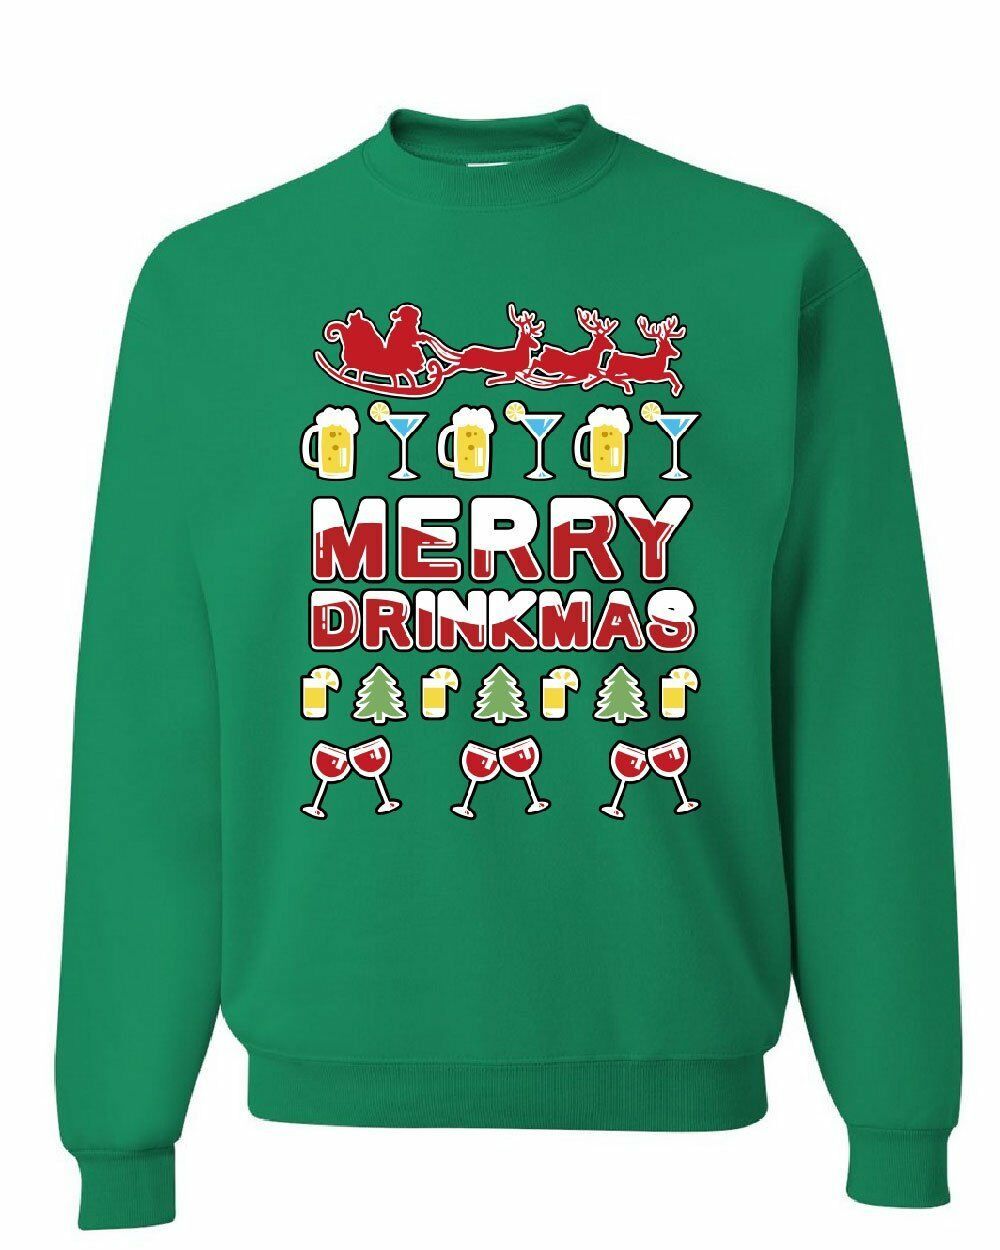 Merry Drinkmas Sweatshirt  Santa Drinking Party Beer Christmas Sweatshirt Style: Sweatshirt, Color: Green